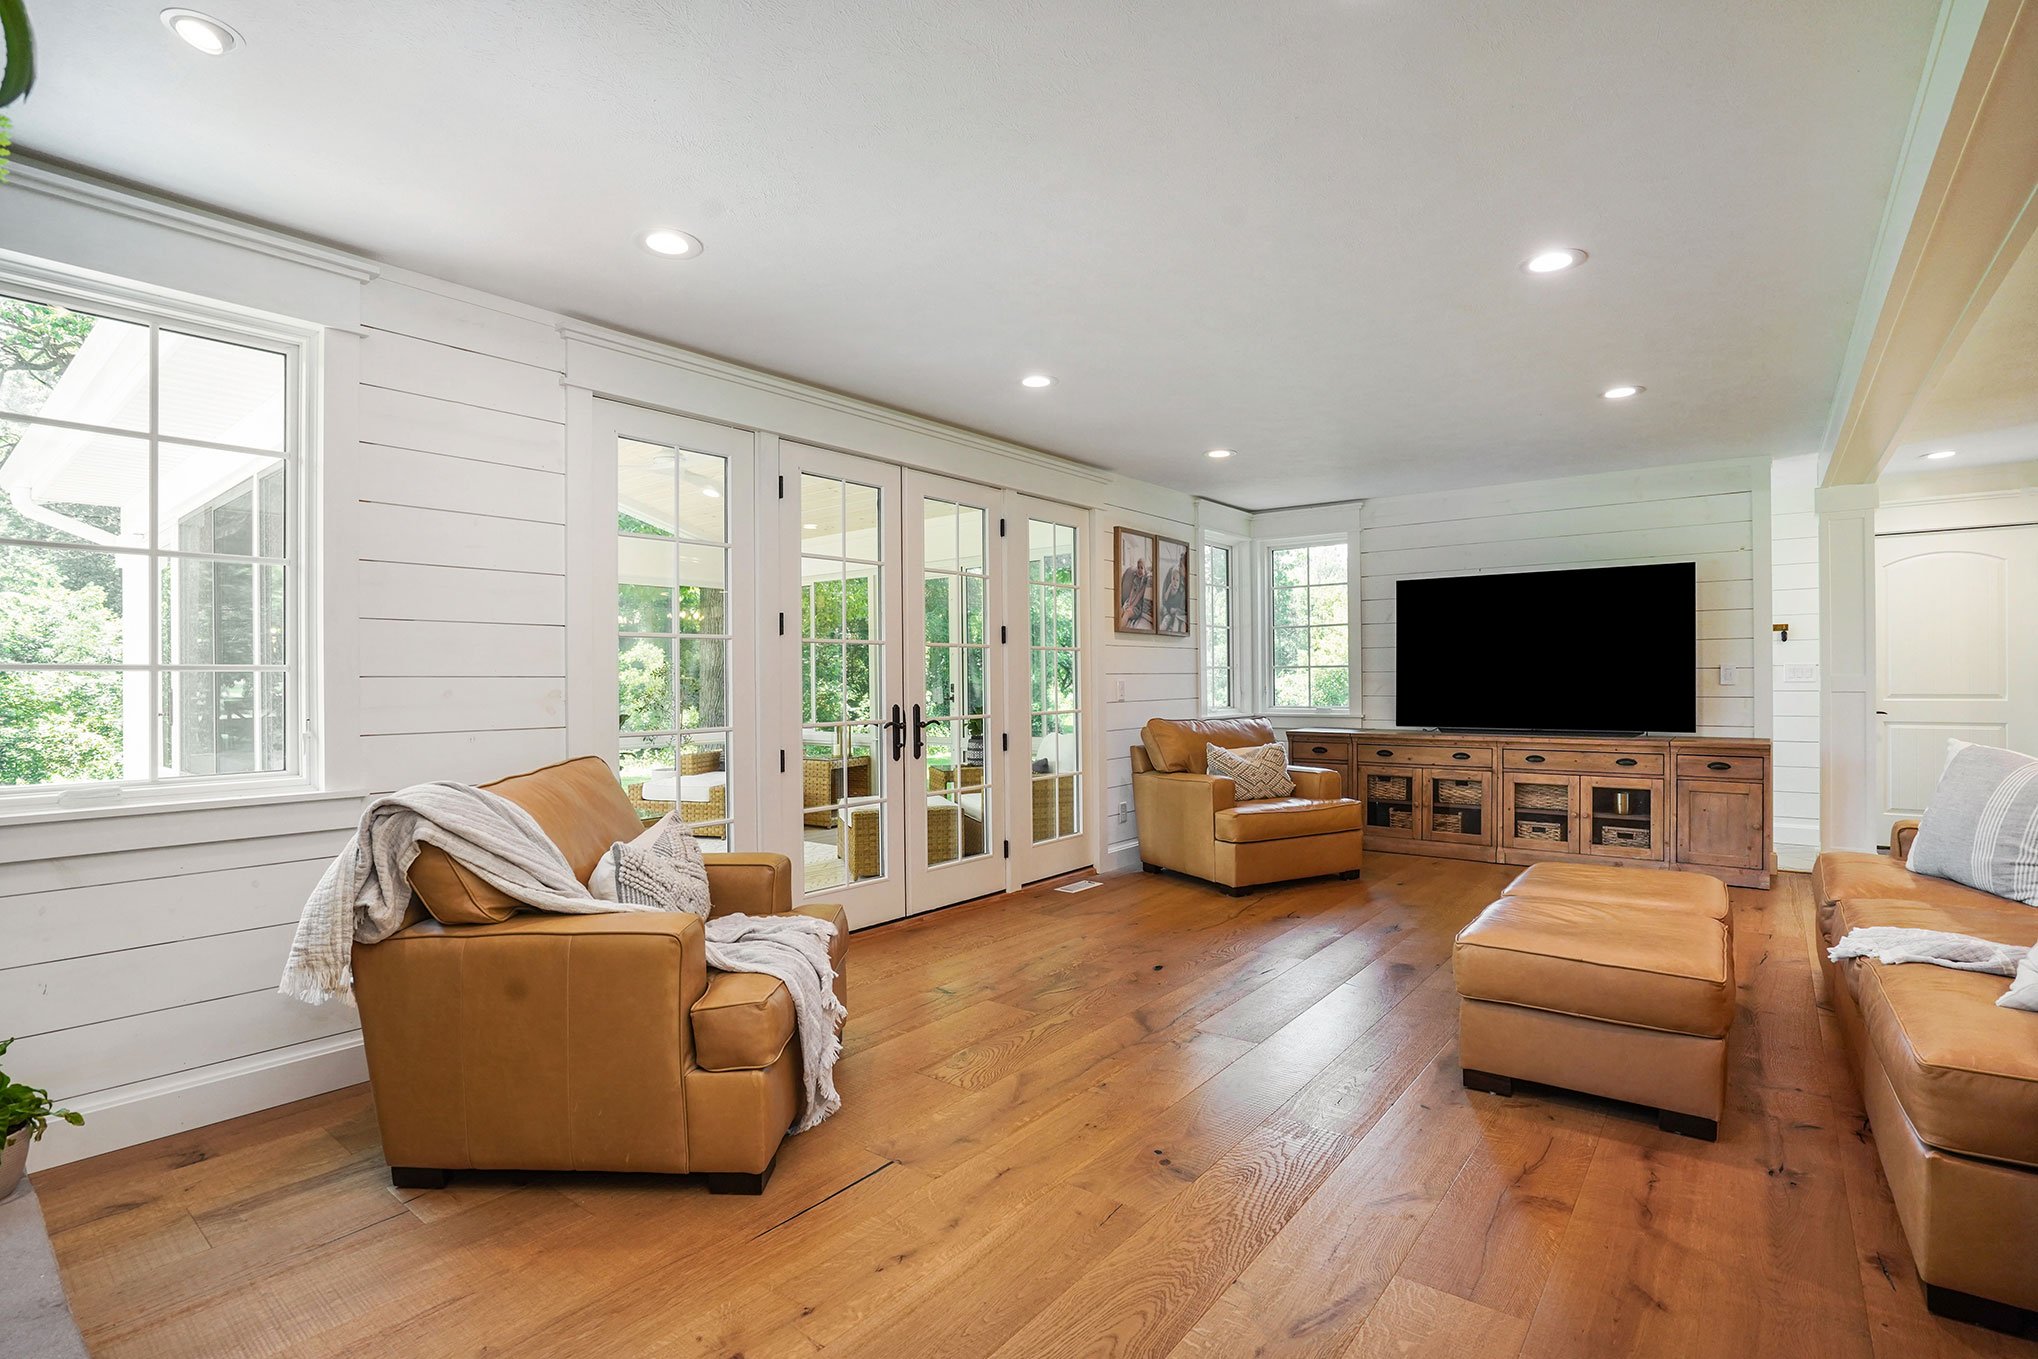 living room. hardwood floor. large windows. leather couches.jpg